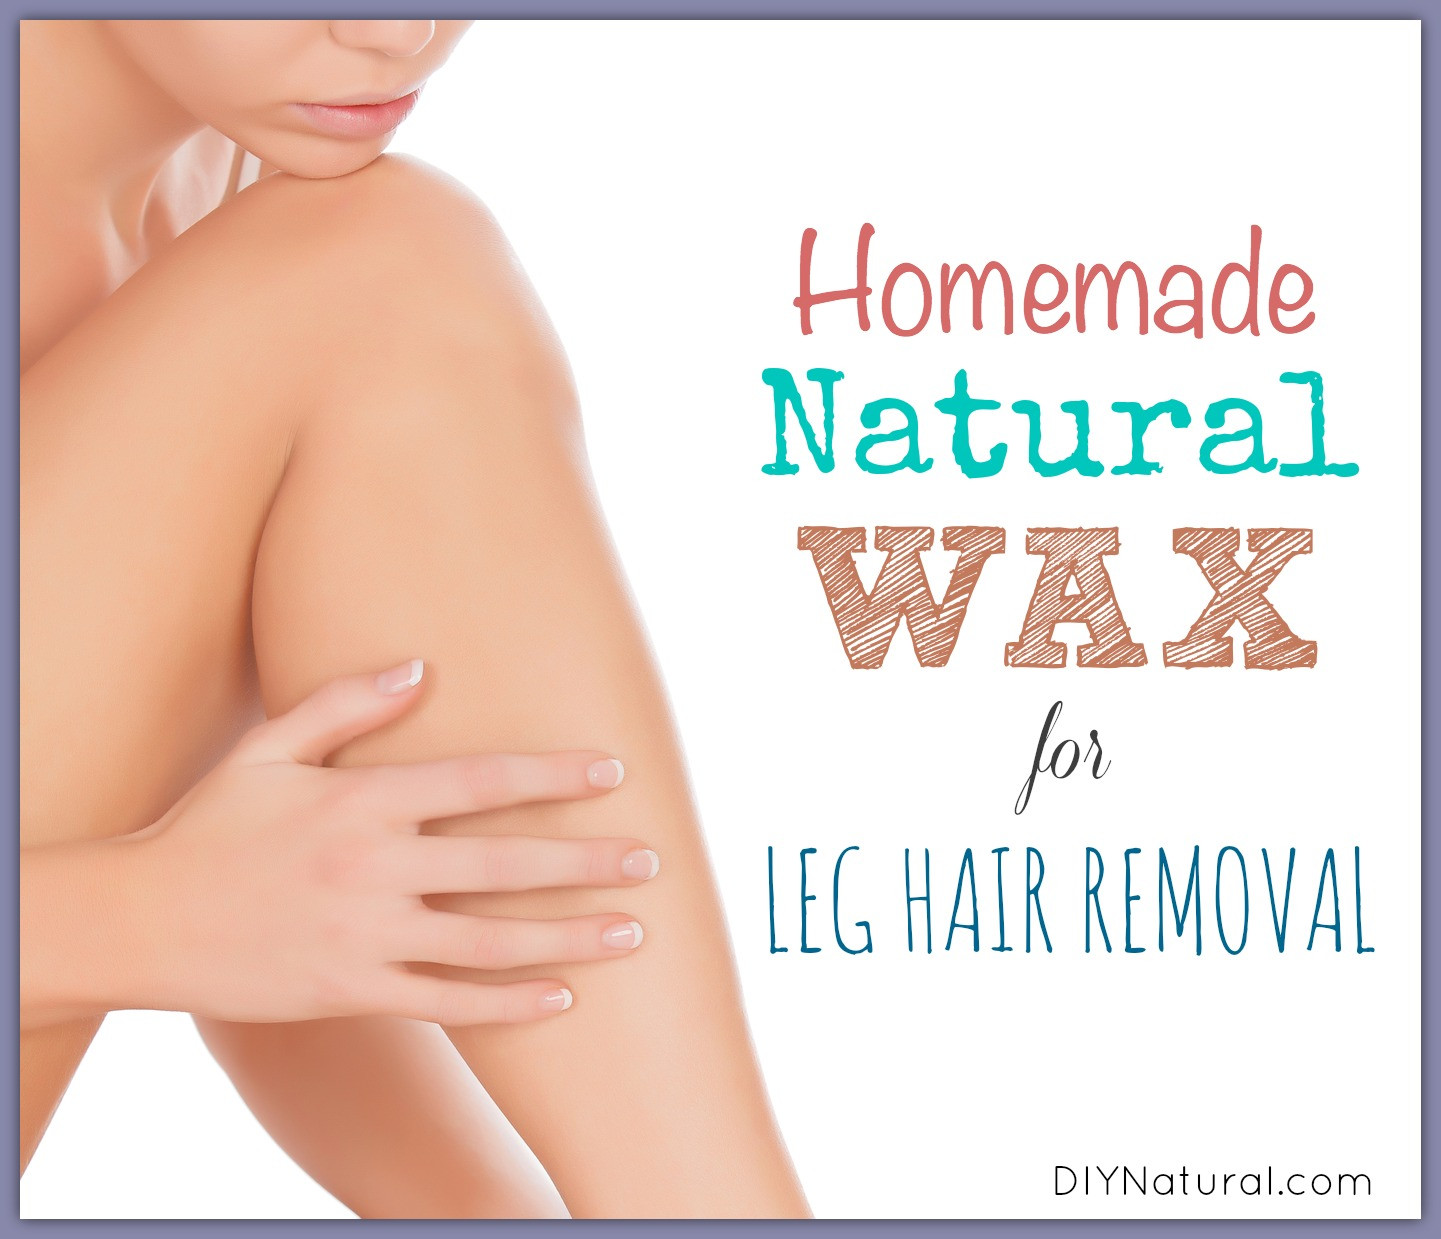 DIY Hair Removal
 How To Make Sugar Wax Recipe for Natural Leg Hair Removal